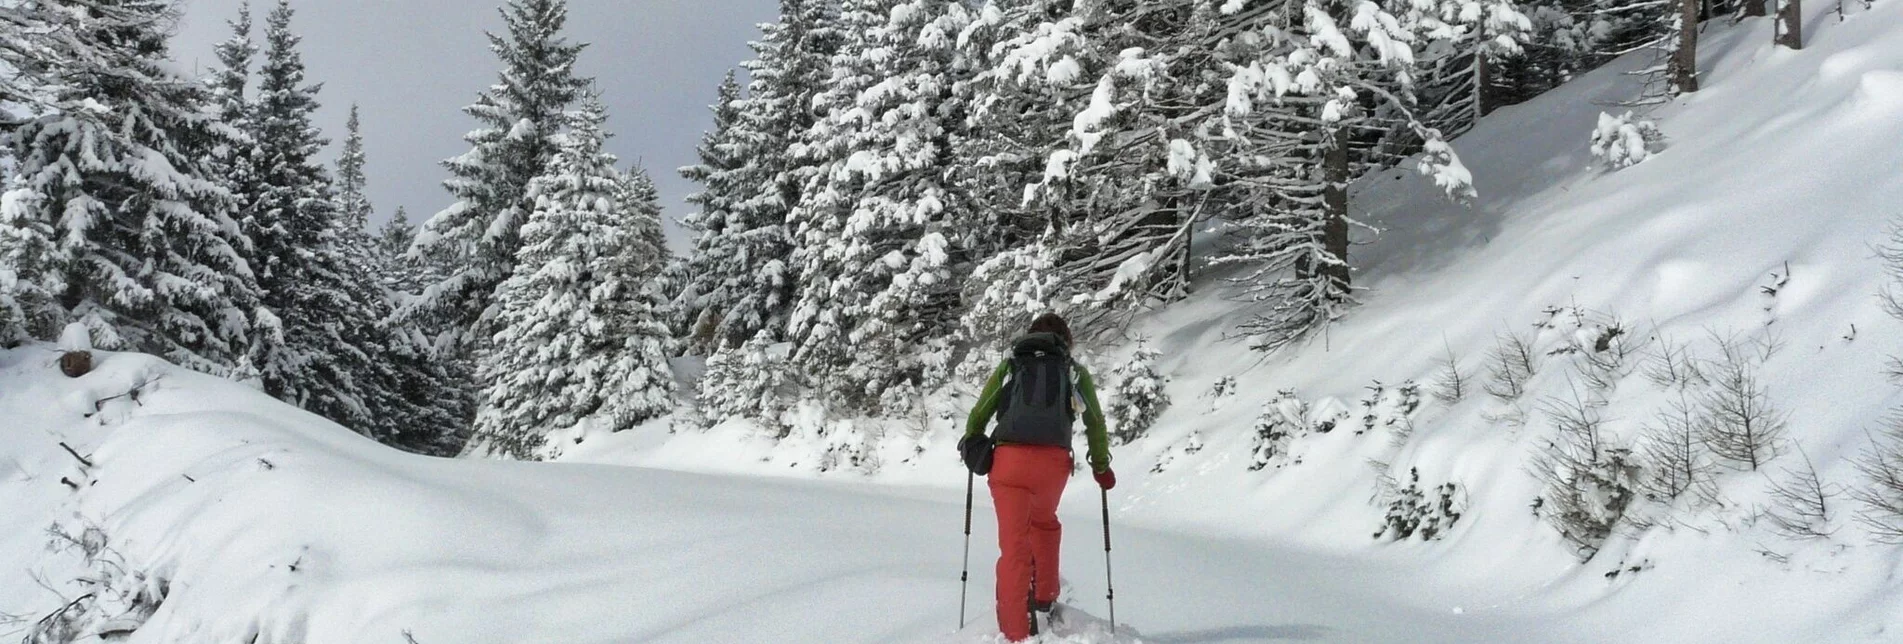 Snowshoe walking Snowshoe hike Turneralm and Hirschkreuz - Touren-Impression #1 | © Weges OG